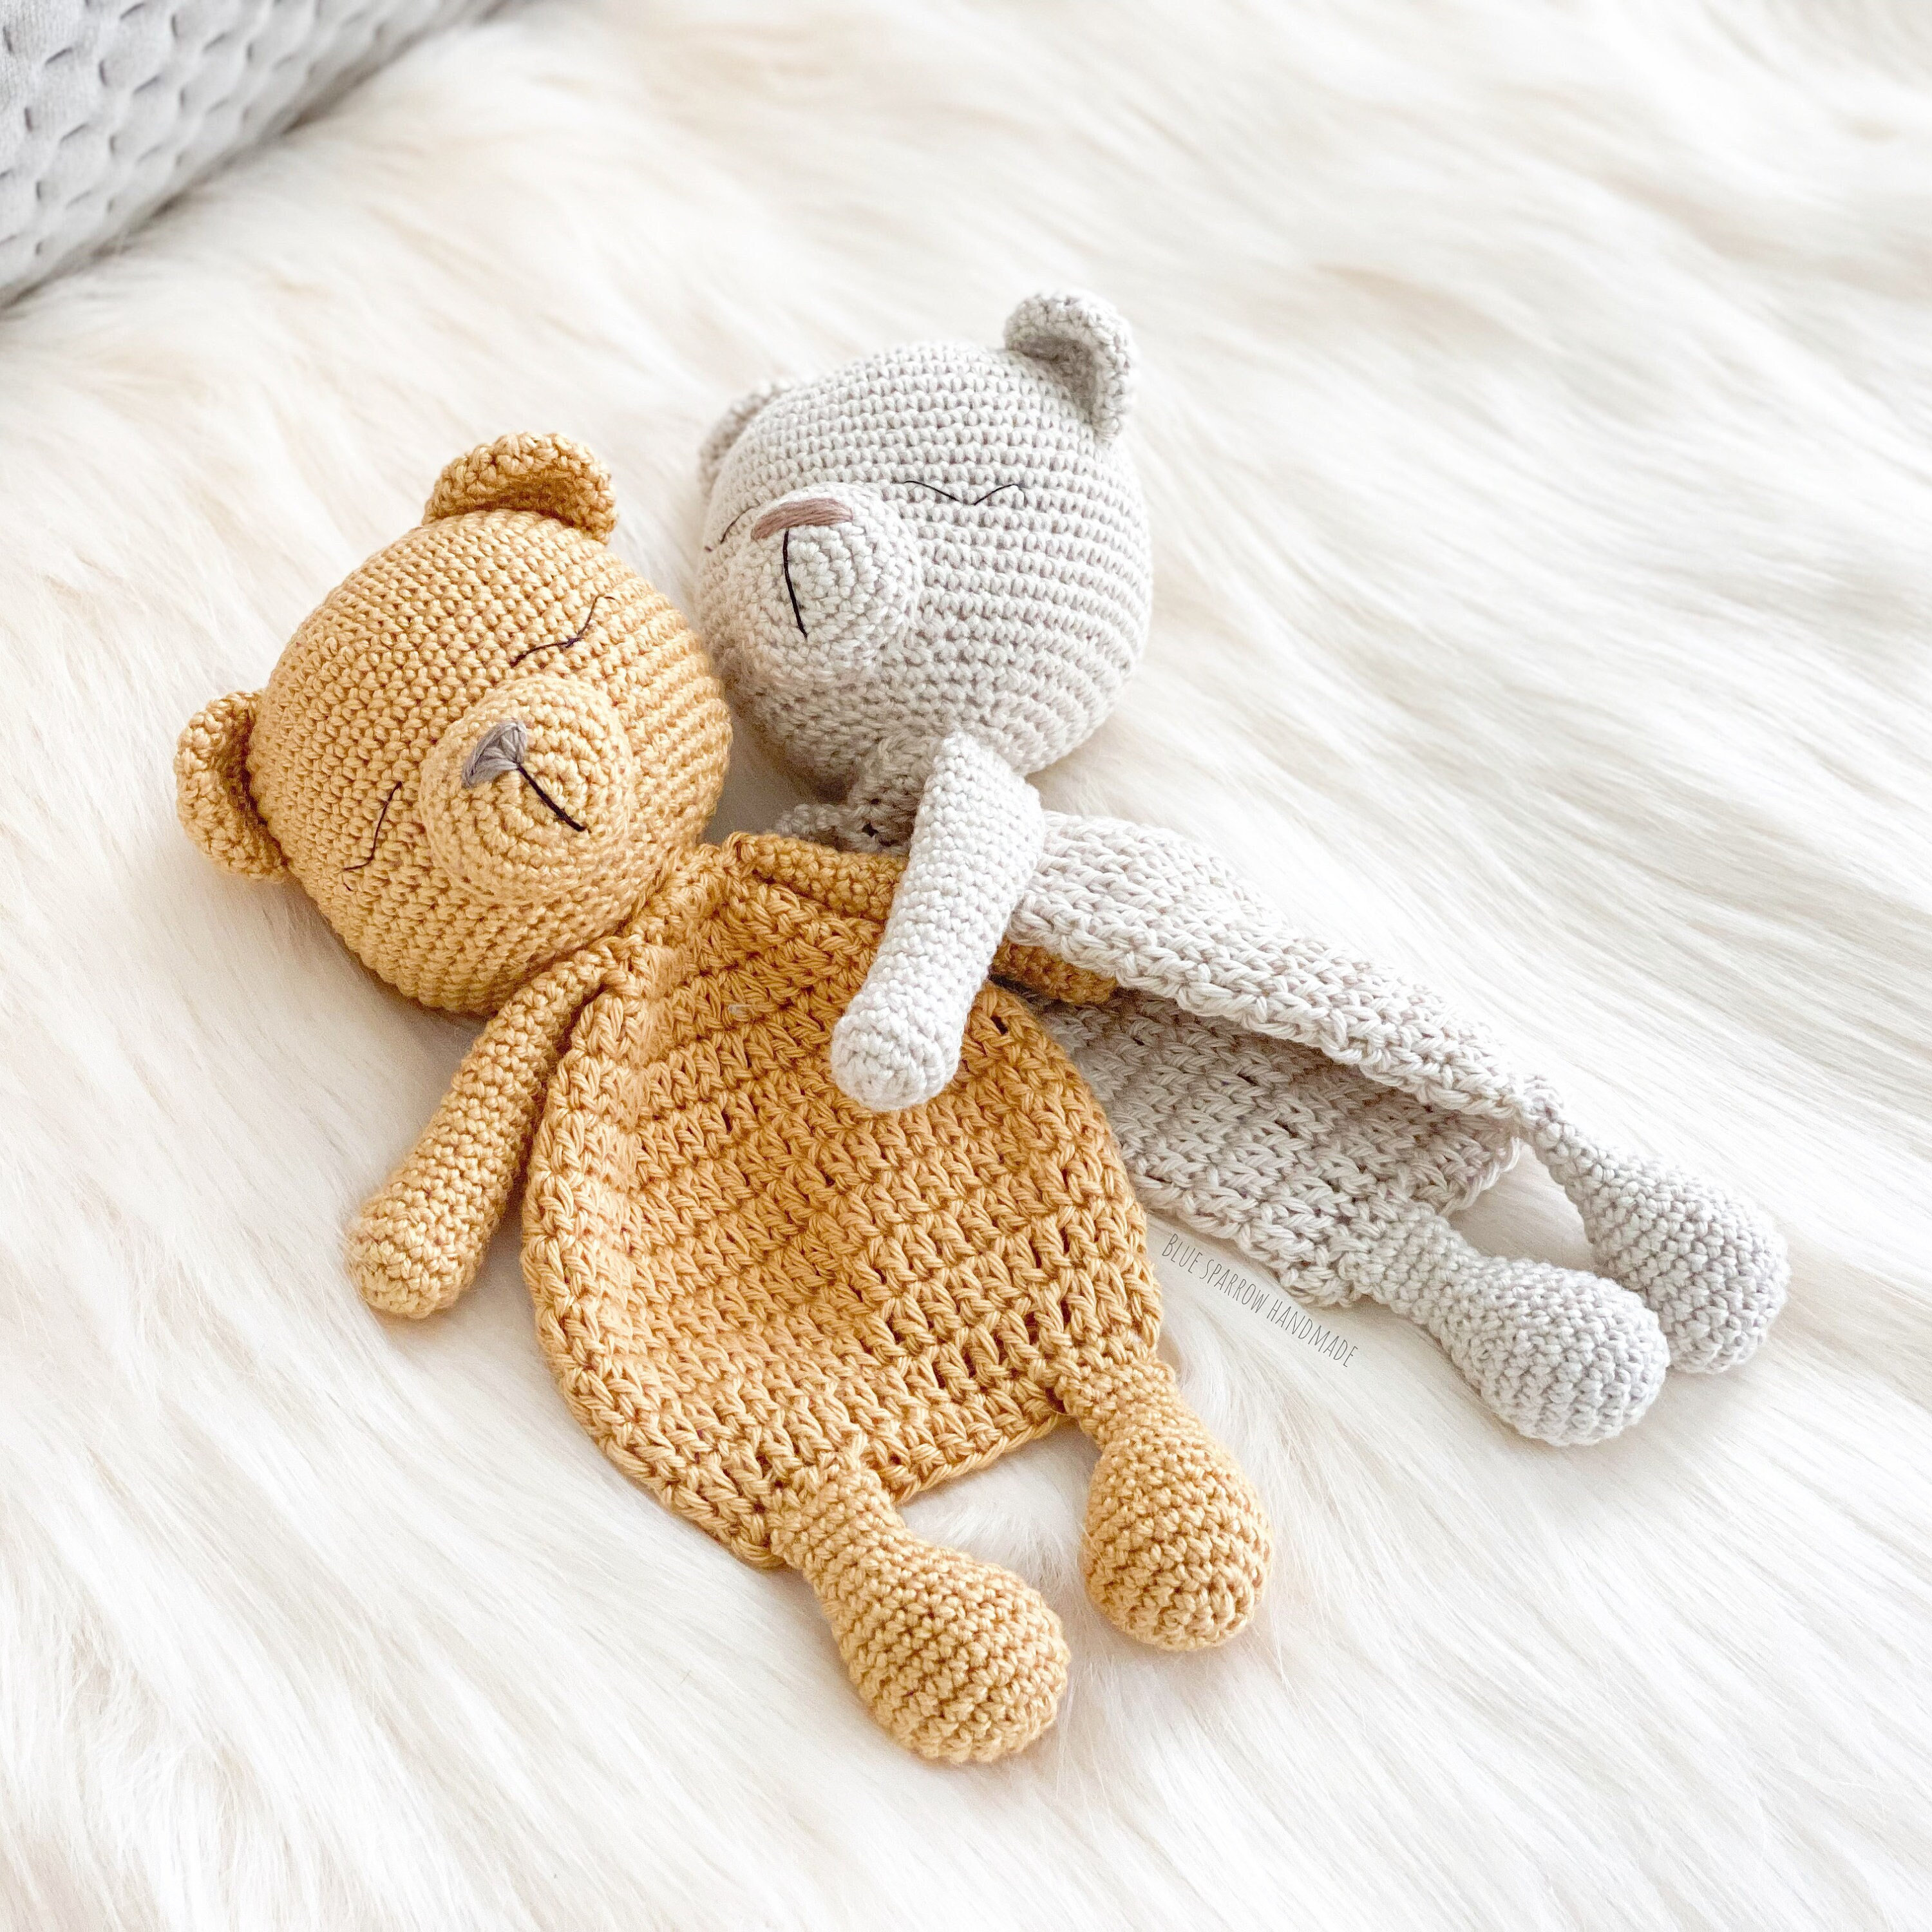 Kaloo htf Tan Bear Security Blanket Lovey 11 Knotted Stuffed Plush Baby  doudou